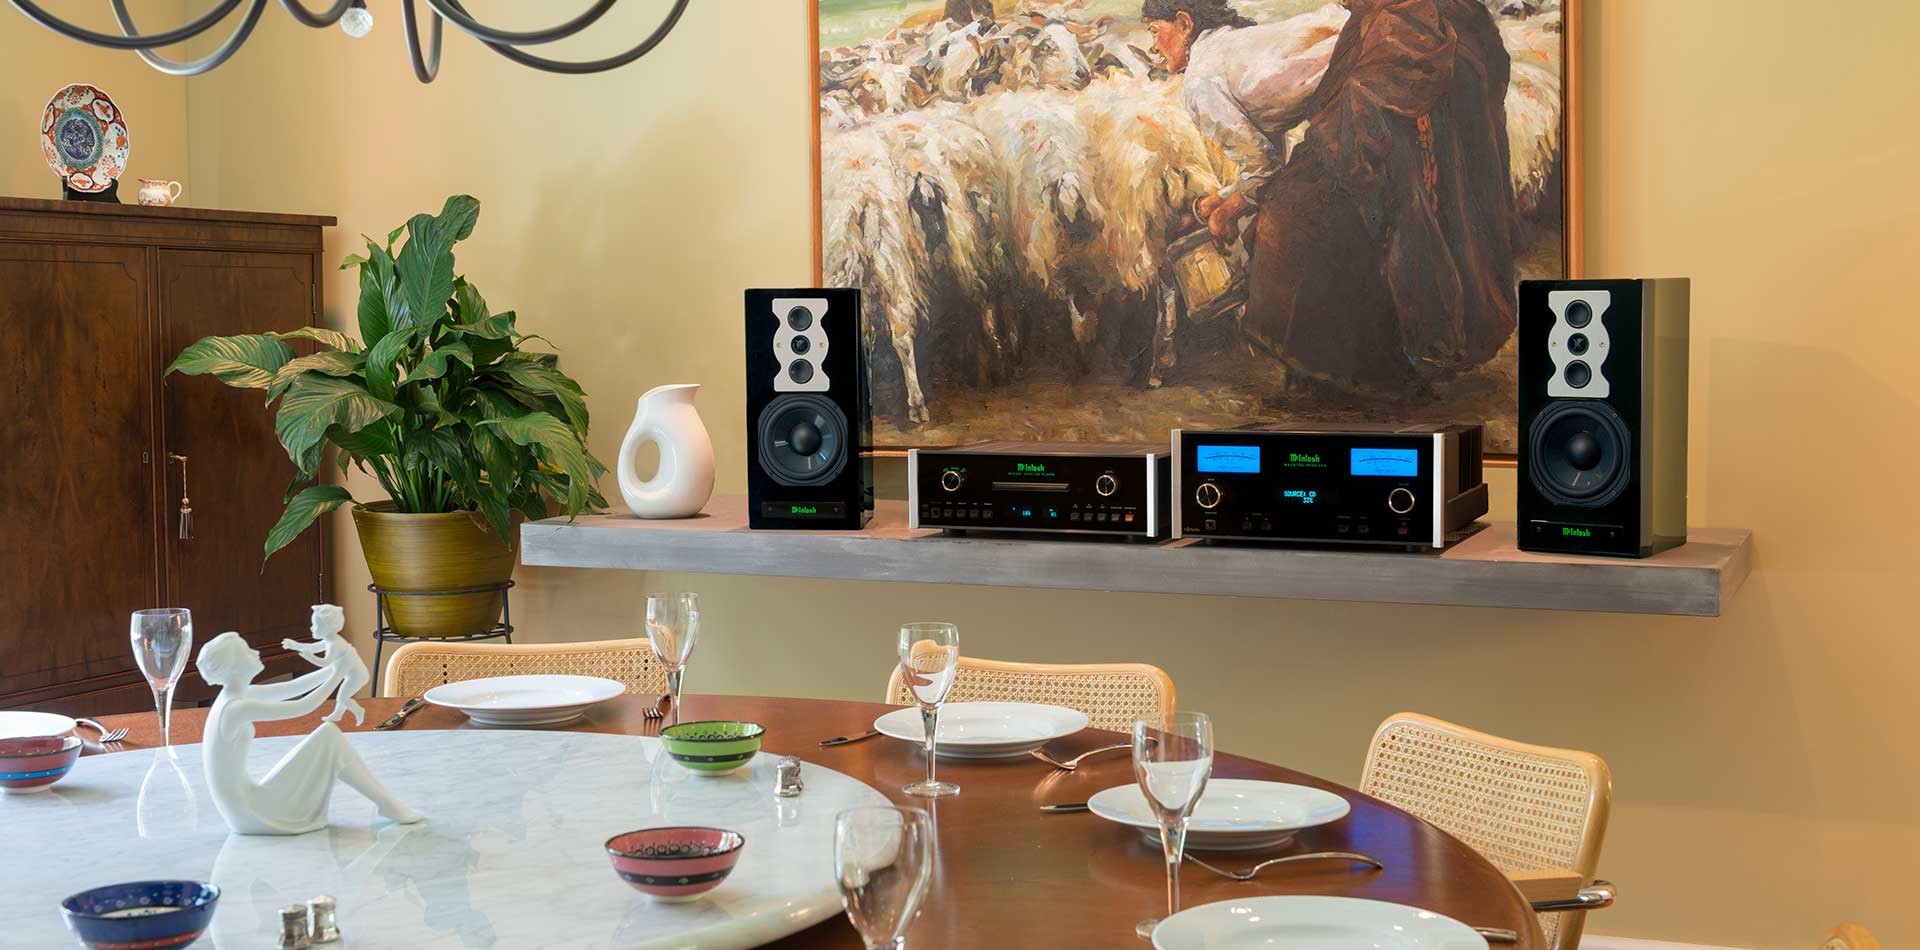 McIntosh SoHo III home audio music system